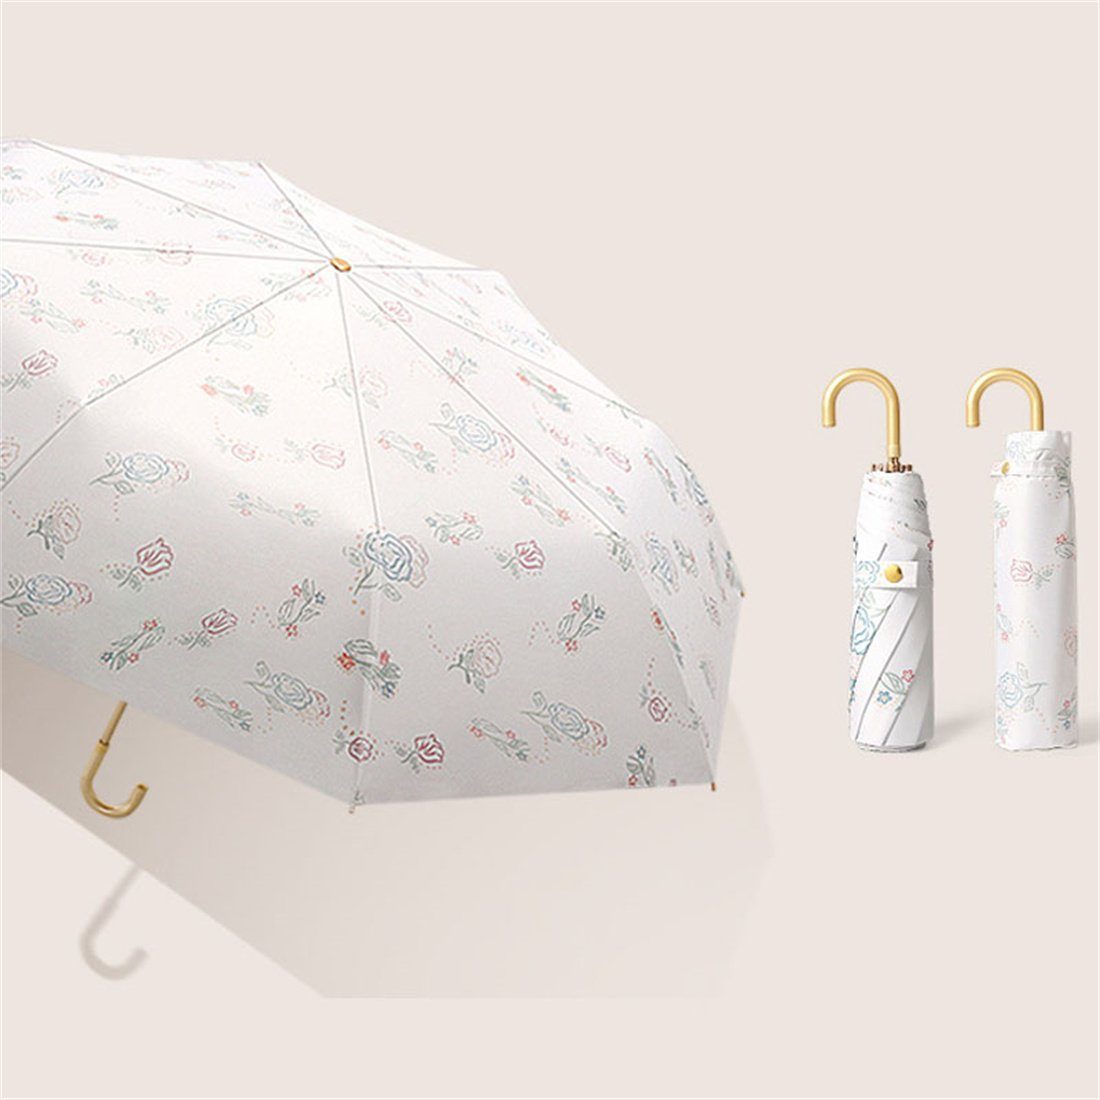 DÖRÖY Taschenregenschirm Hakenschirm,Blumenmuster-Regenschirm,regenfest UV-Faltschirm,gebogener